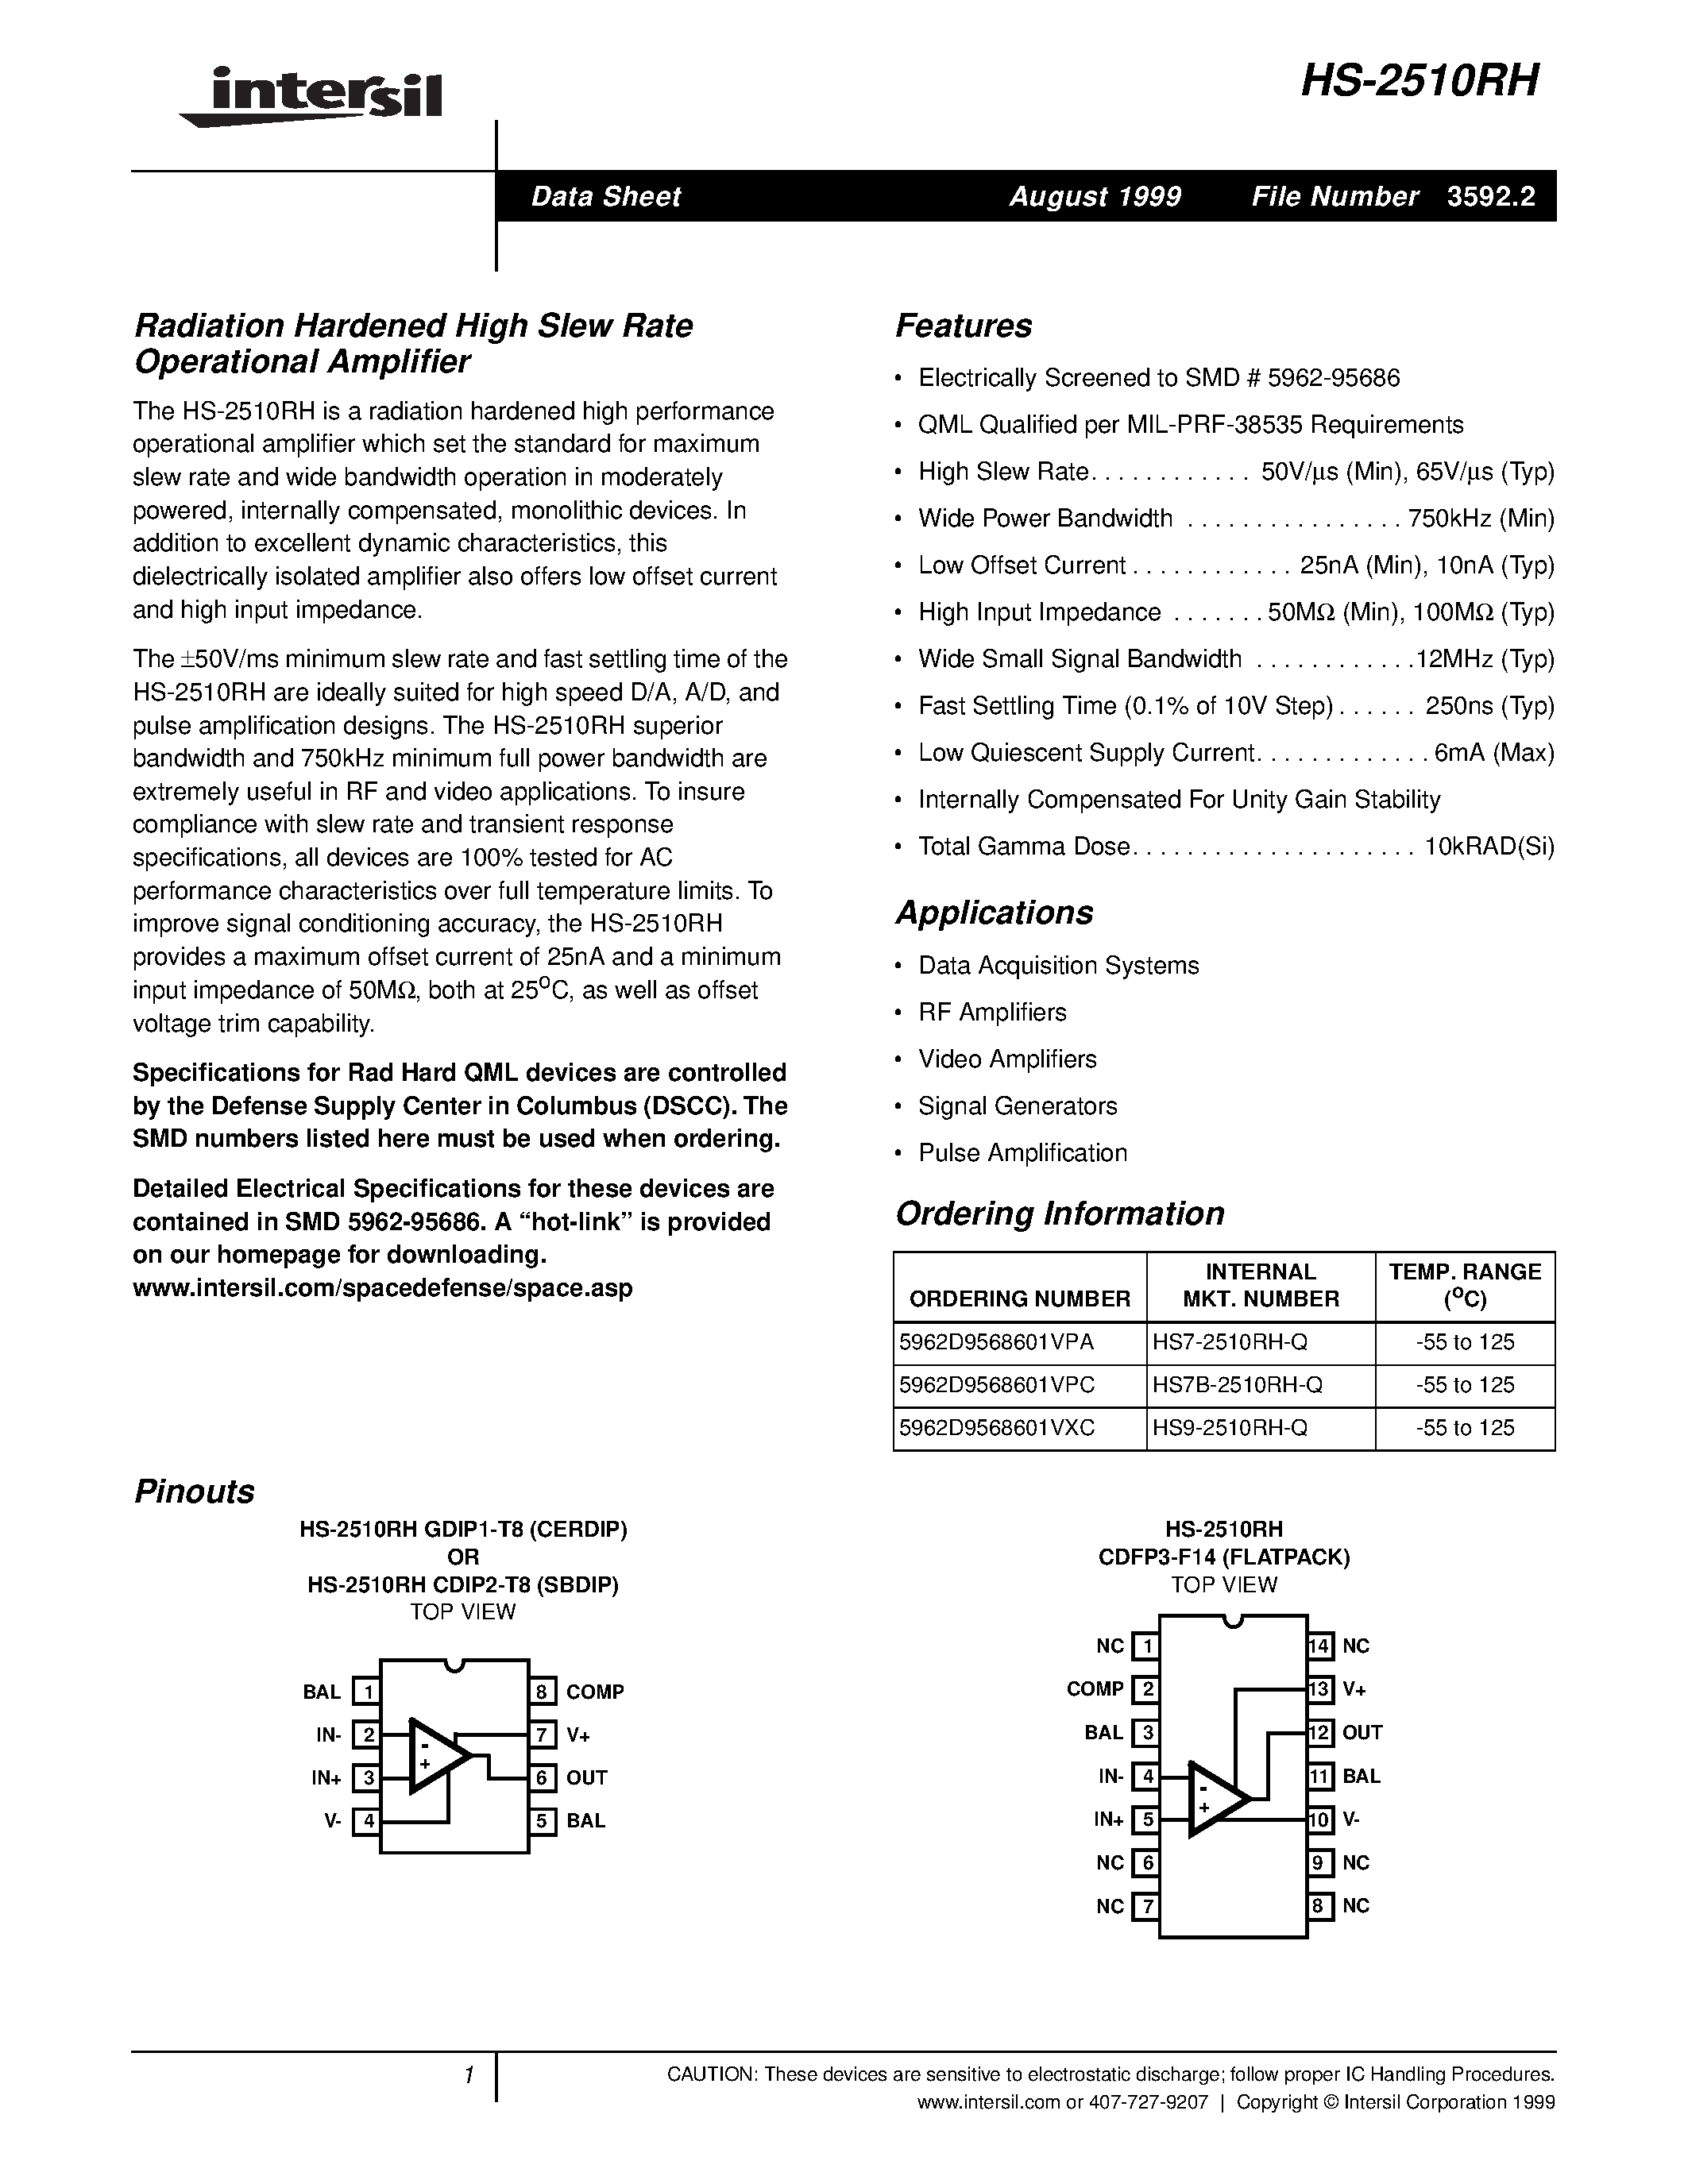 Даташит HS7B-2510RH-Q - Radiation Hardened High Slew Rate Operational Amplifier страница 1